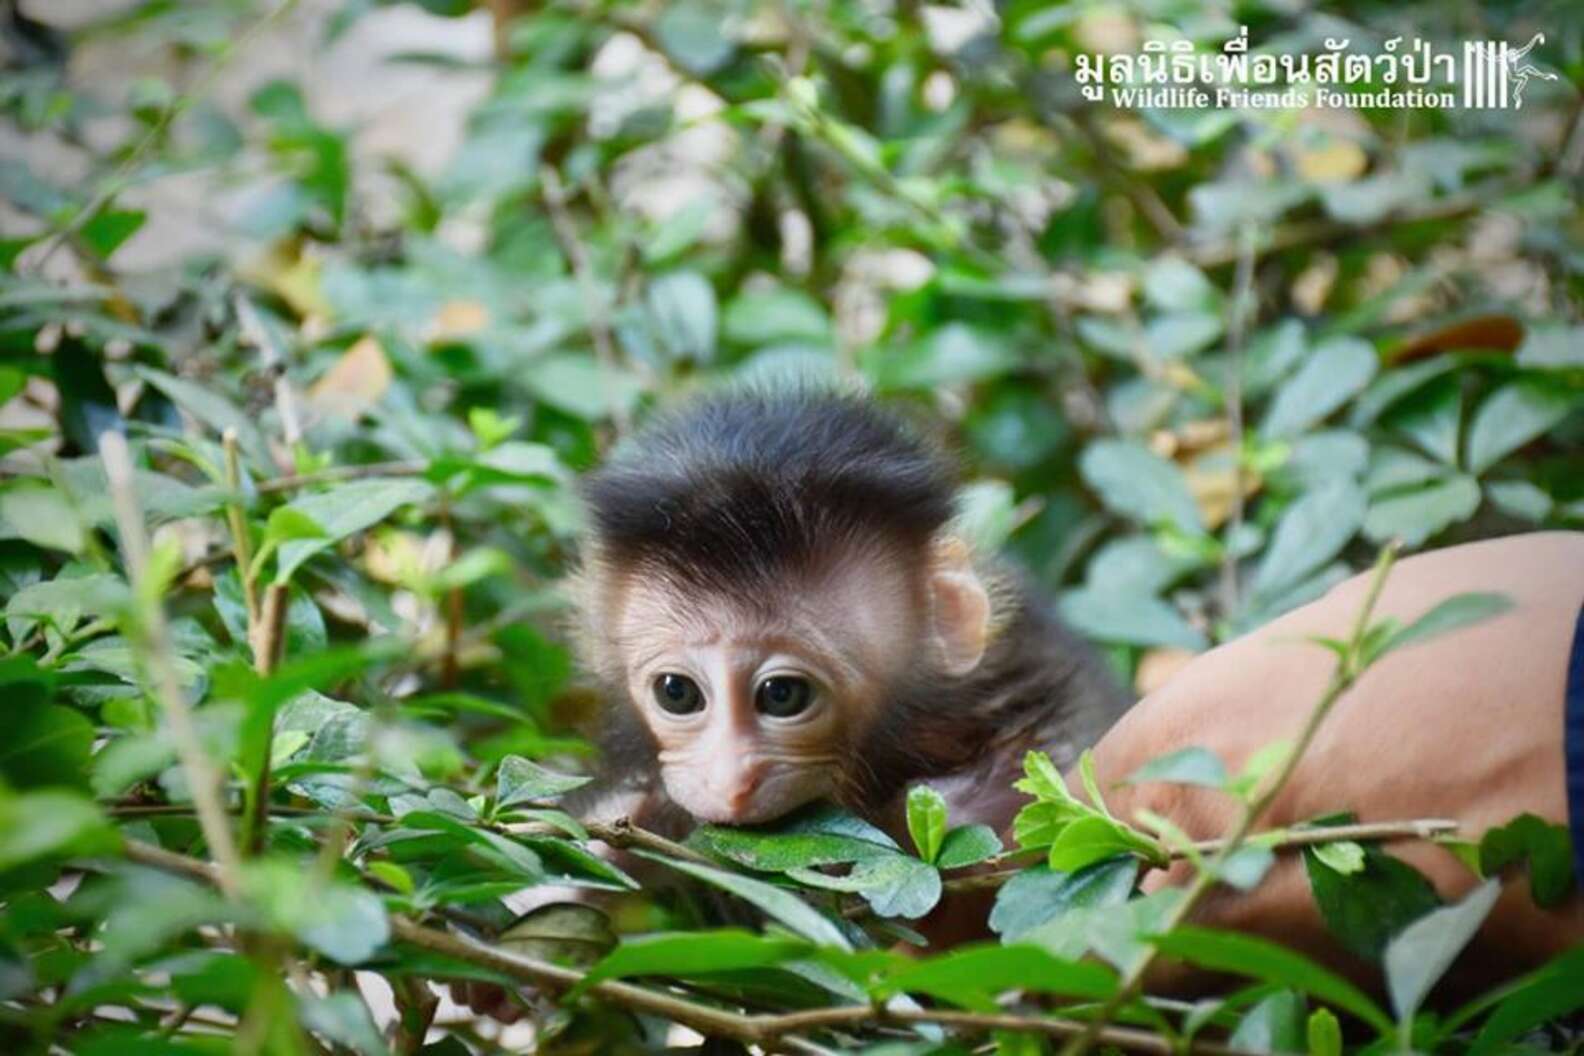 Gibbon Befriends Baby Macaque Monkey At Thailand Rescue Center - The Dodo